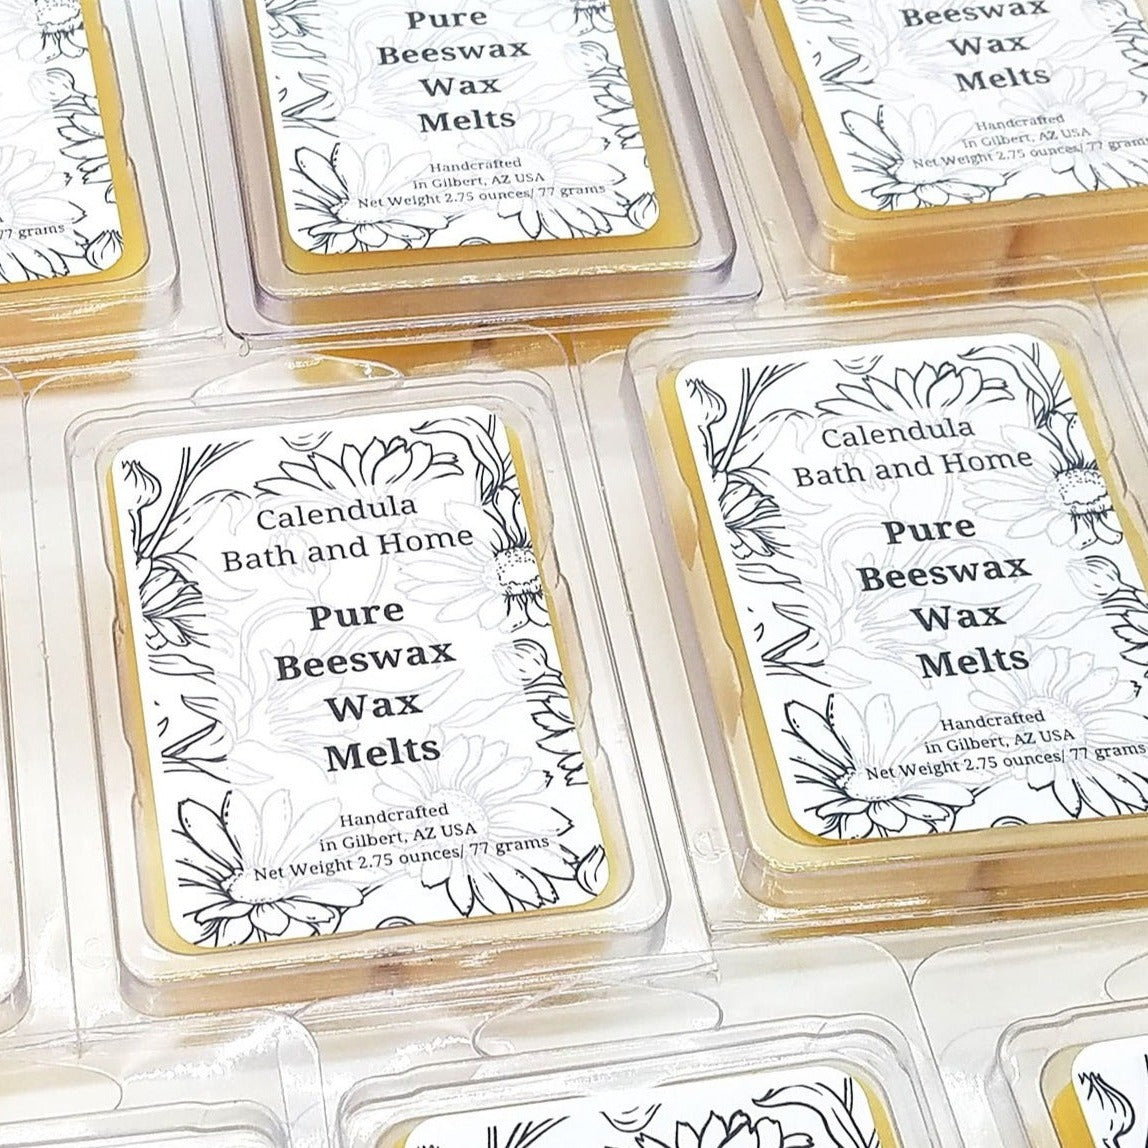 Pure Beeswax Melts - Calendula Bath and Home